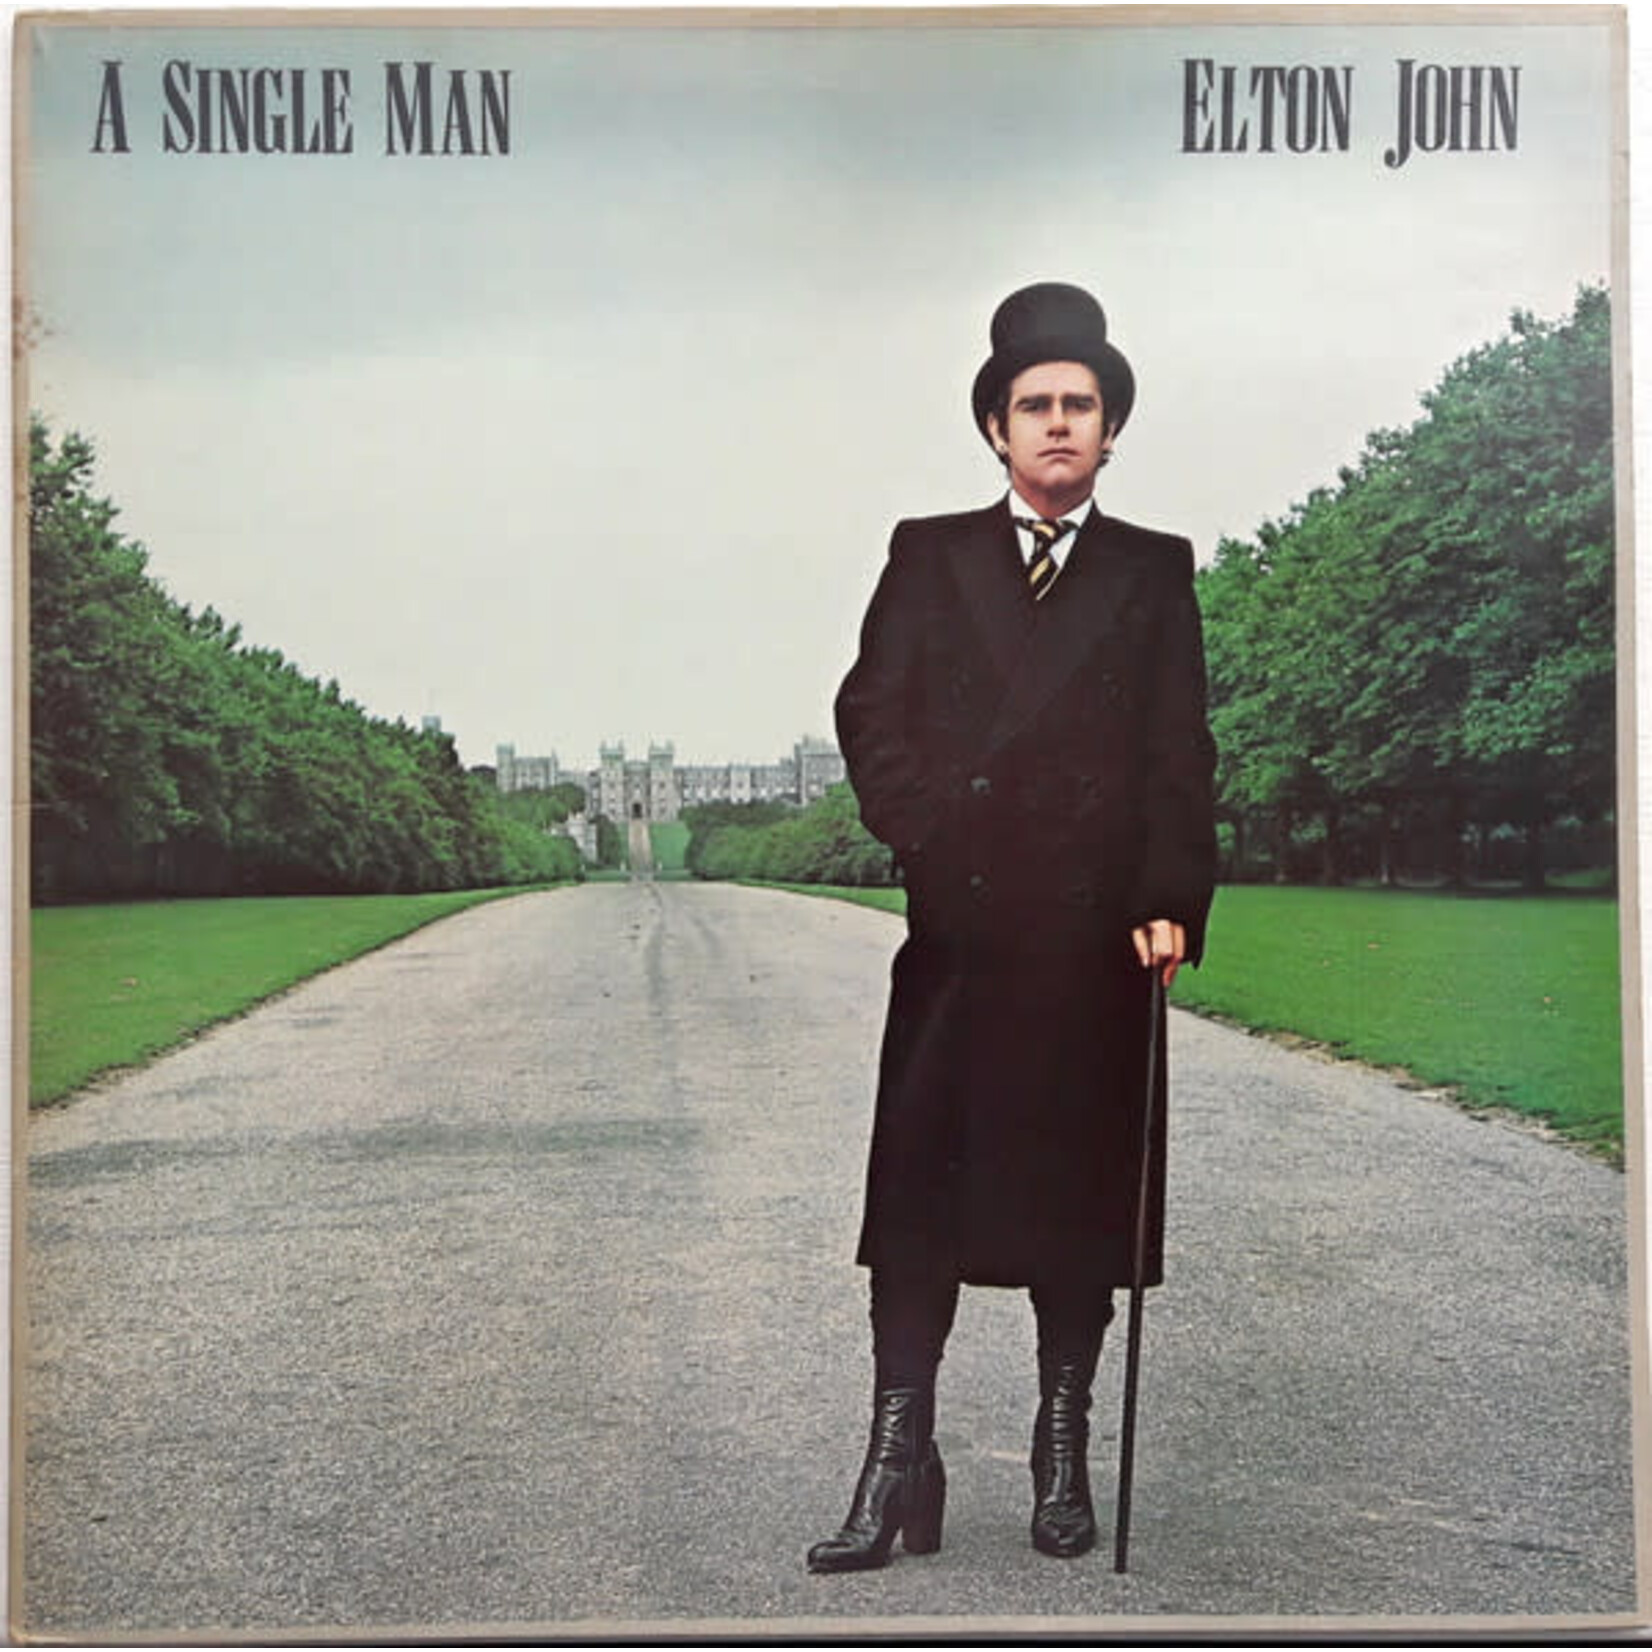 [Vintage] Elton John - A Single Man